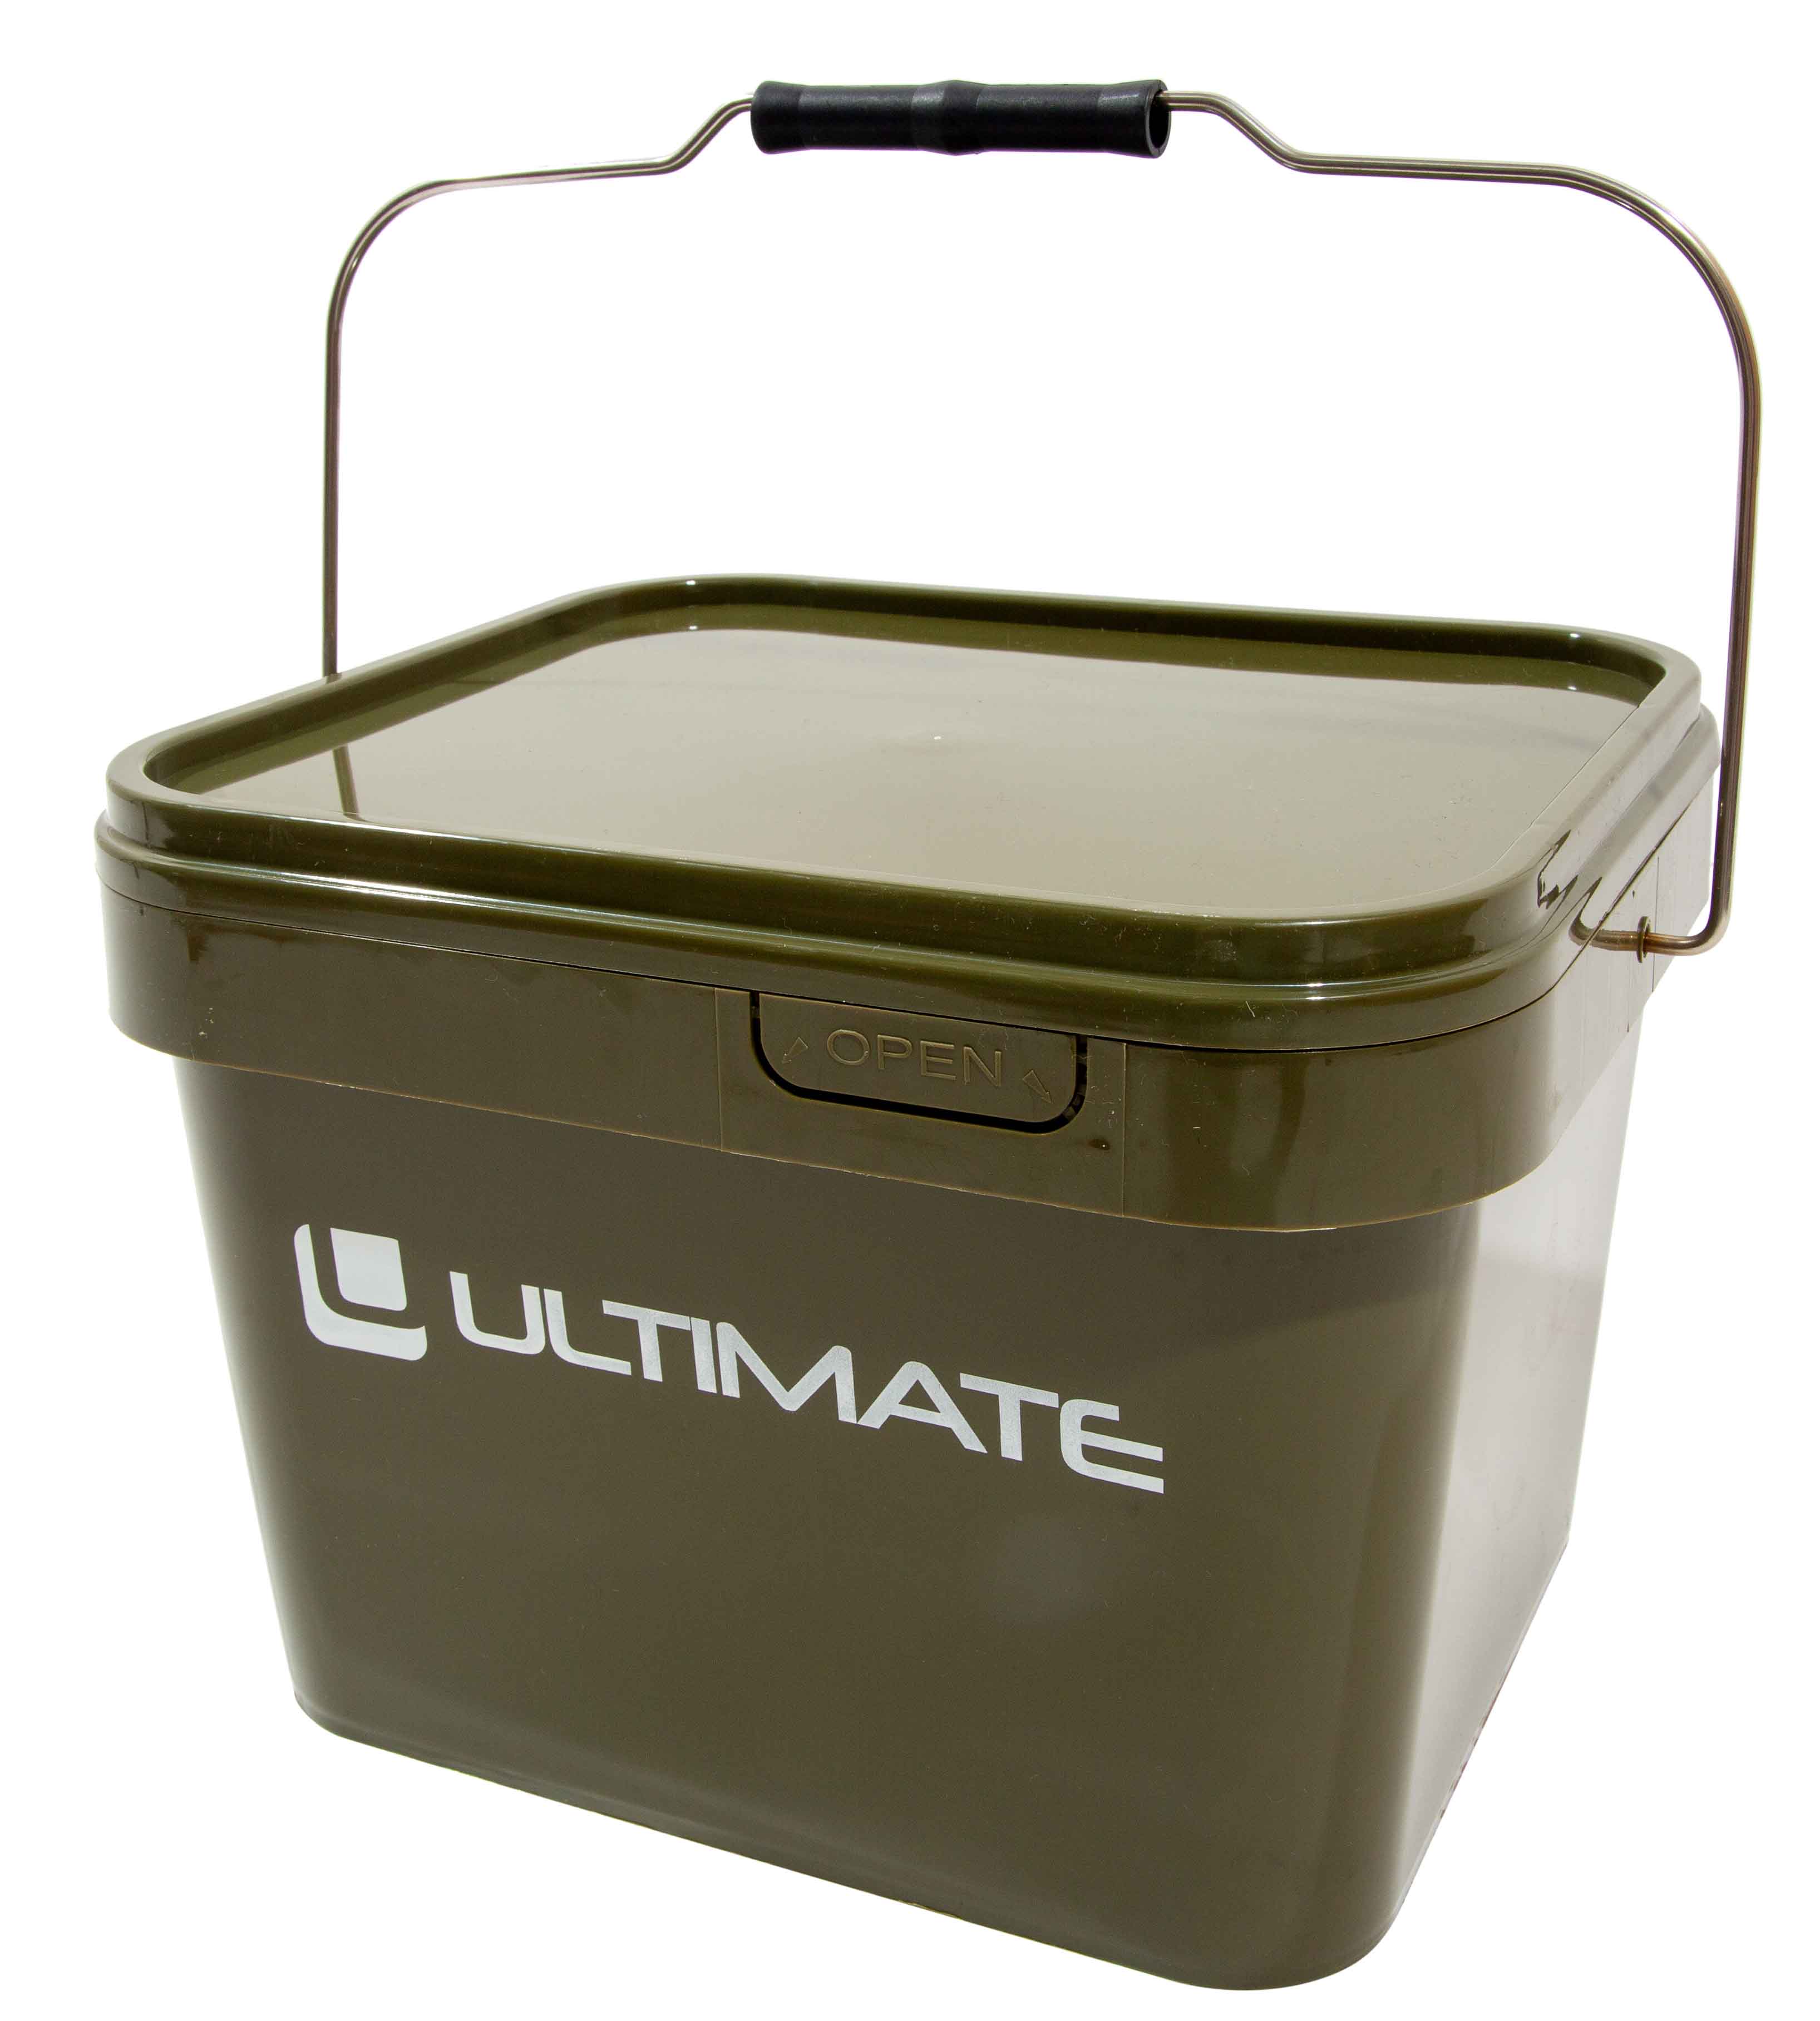 Ultimate Bait Bucket - 10 Liter